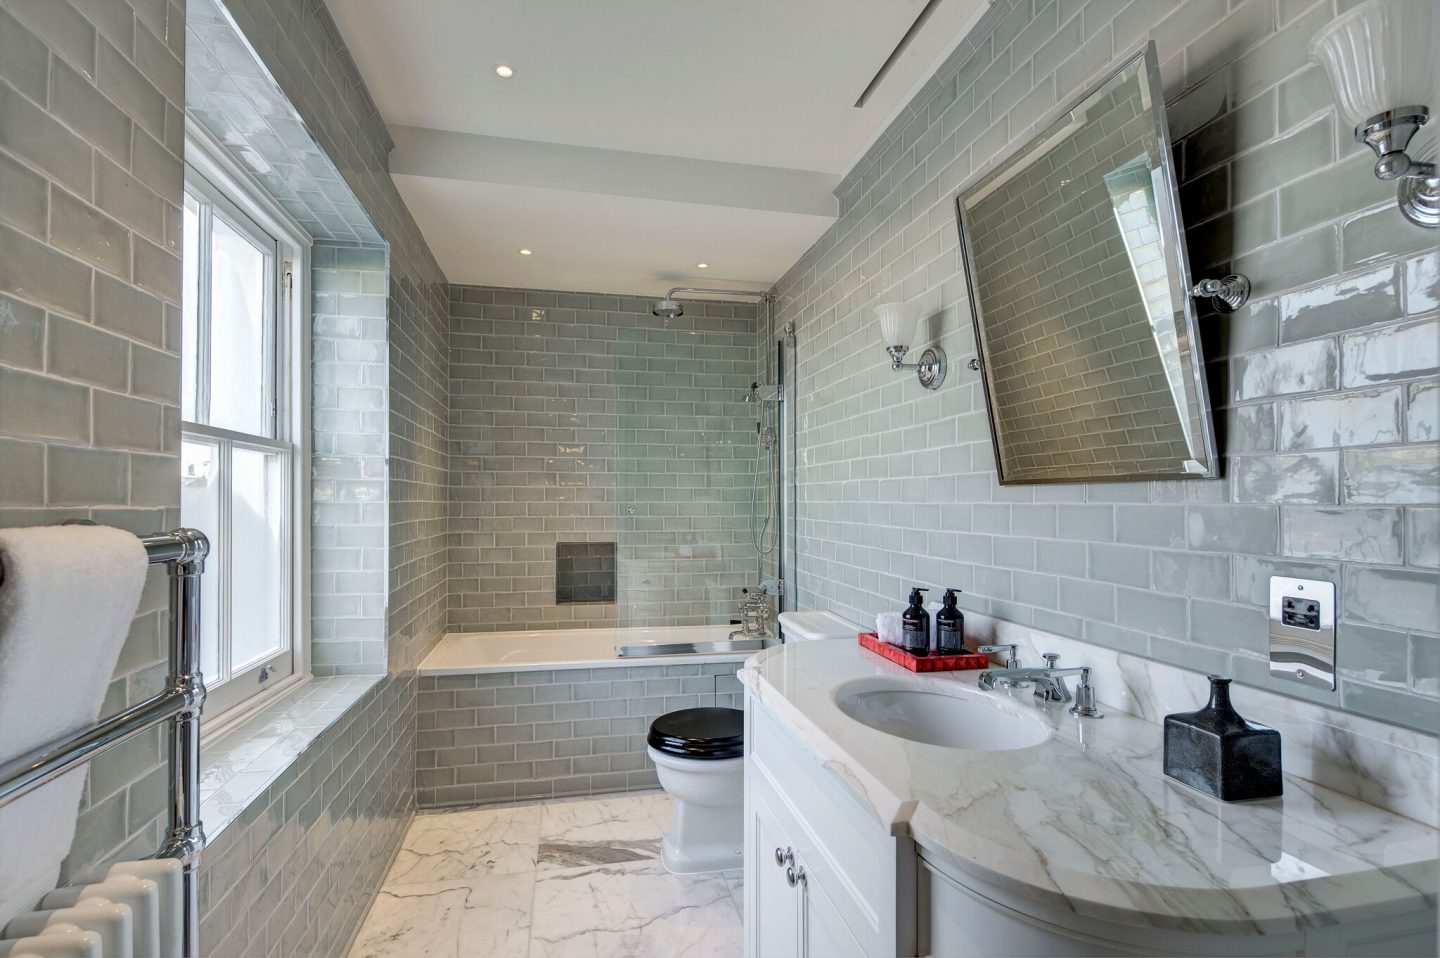 Sage green wall tiles in a luxurious bespoke bathroom designed by Studio L London.